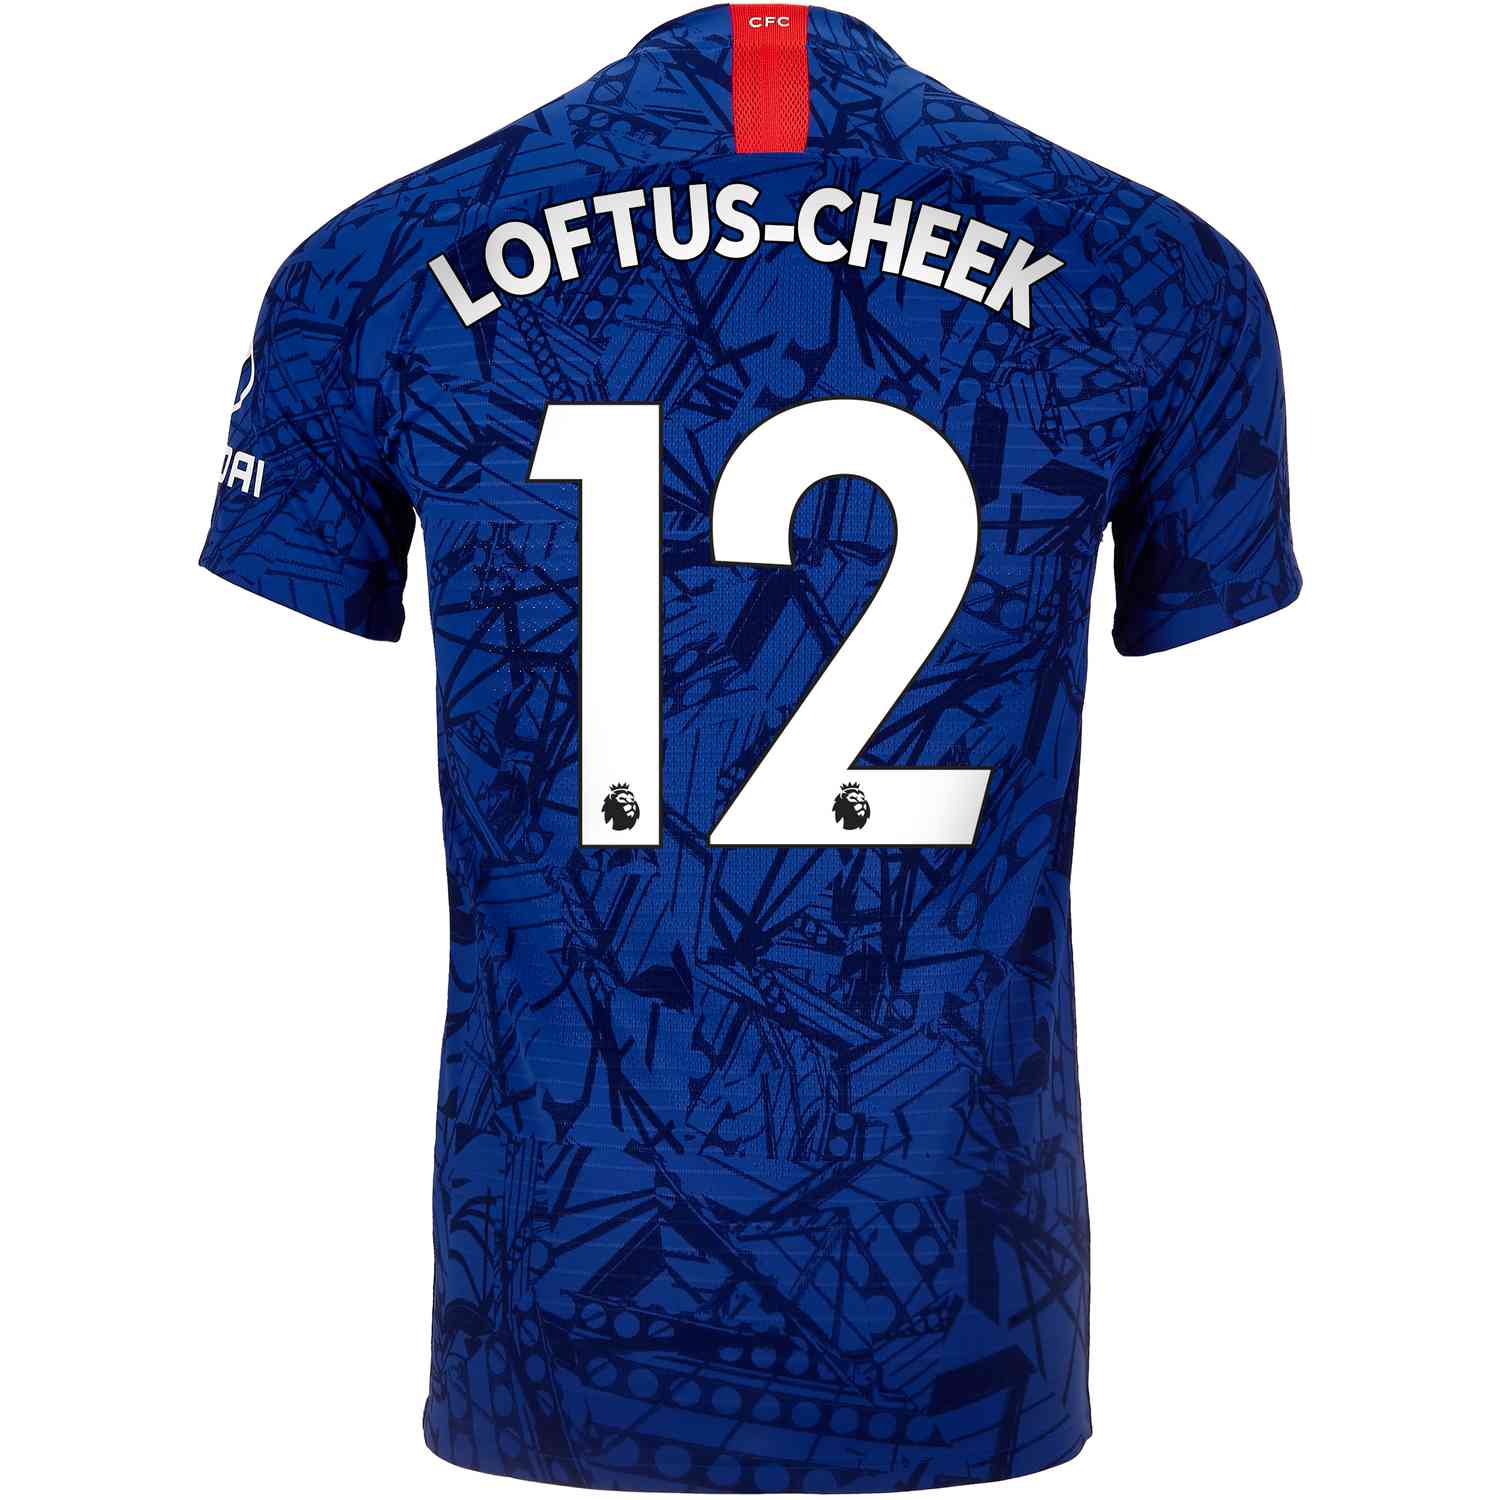 loftus cheek jersey number